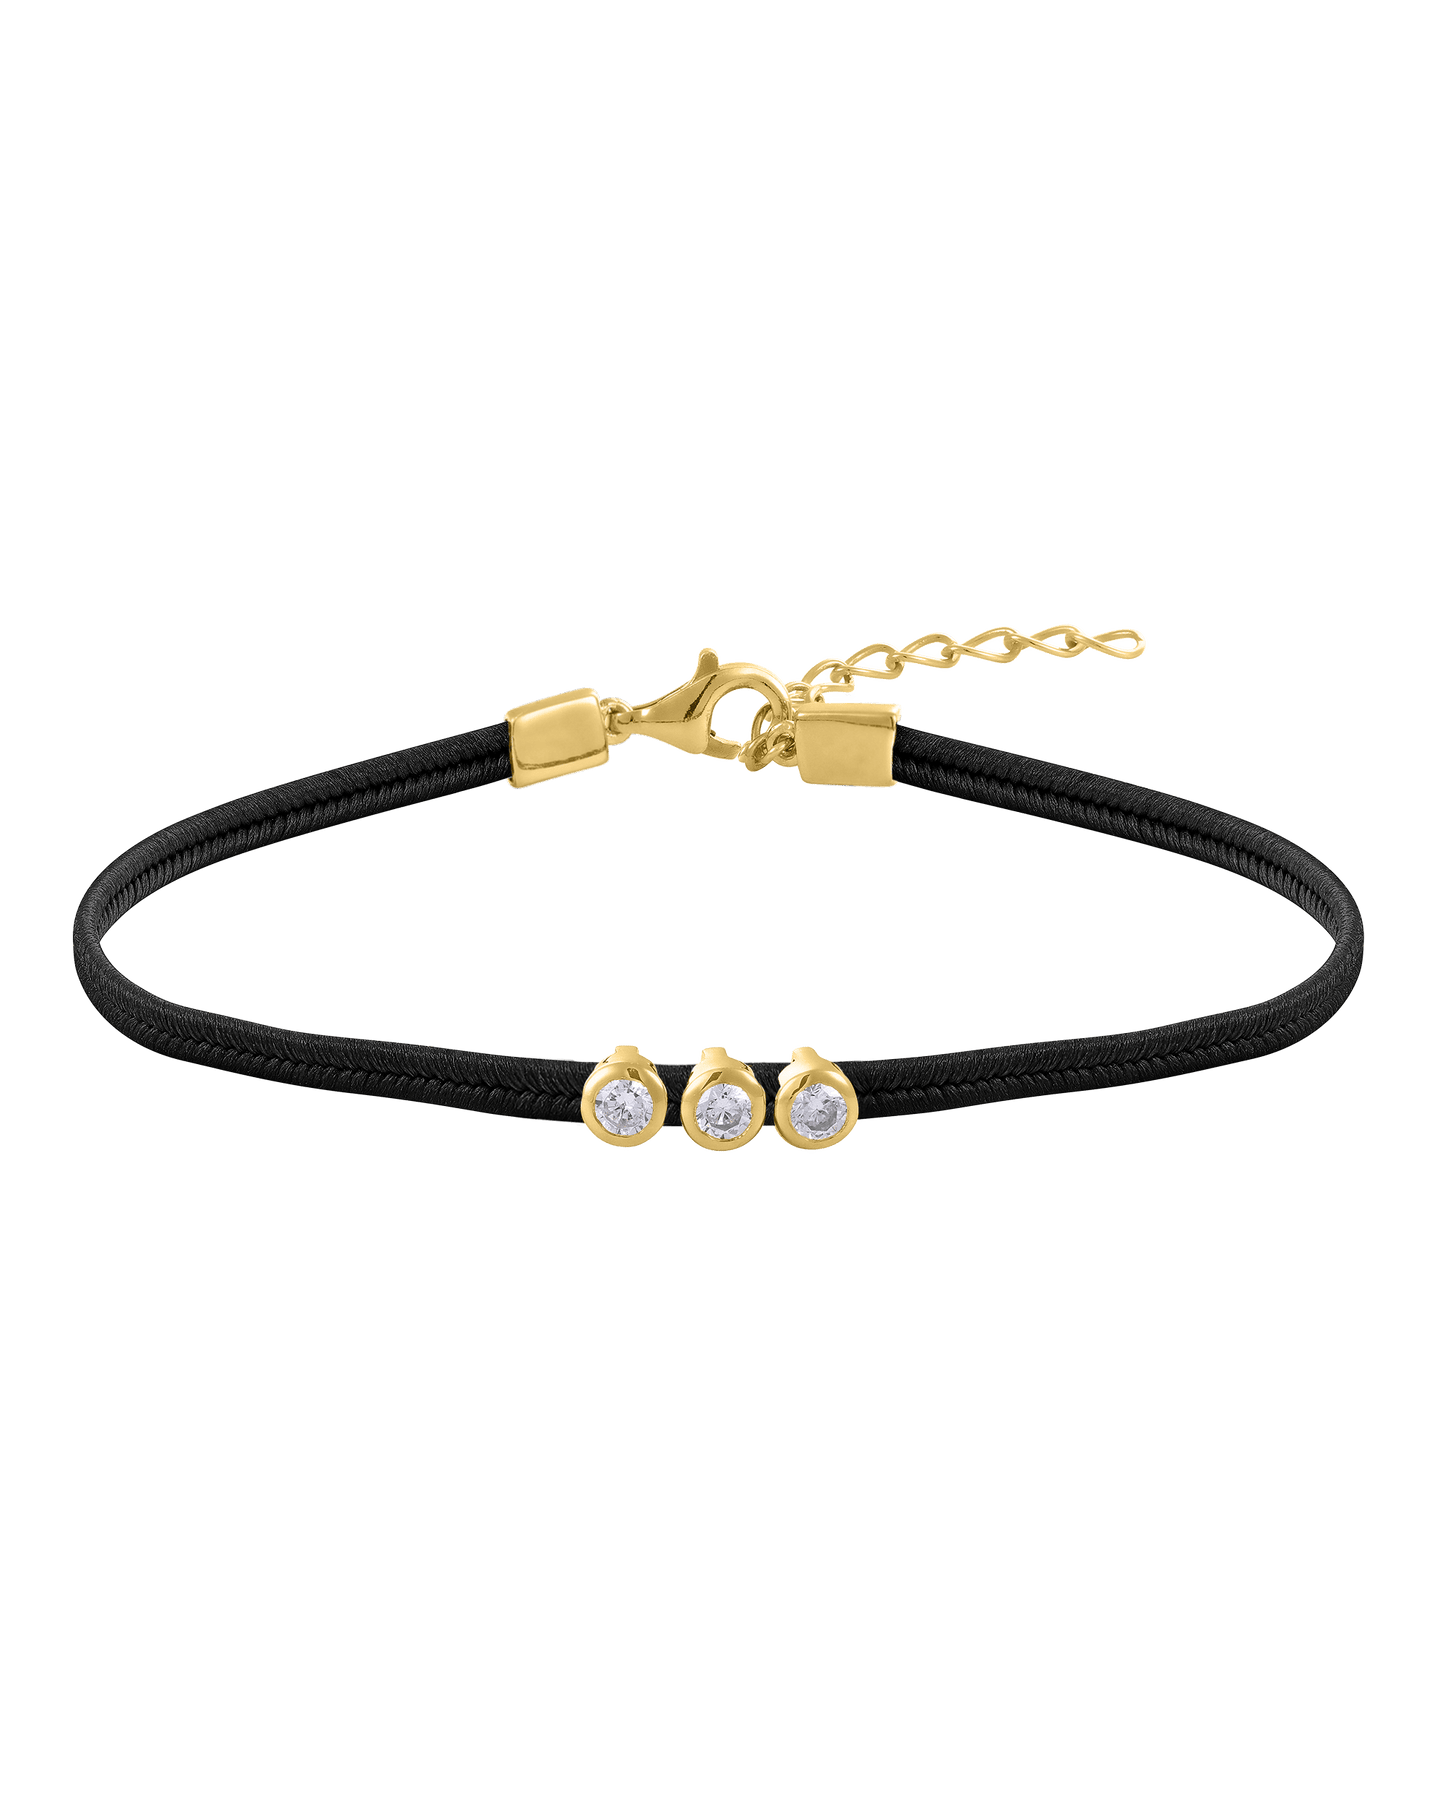 The Cord of Love - 18K Gold Vermeil Bracelets magal-dev 1 Diamond Black 